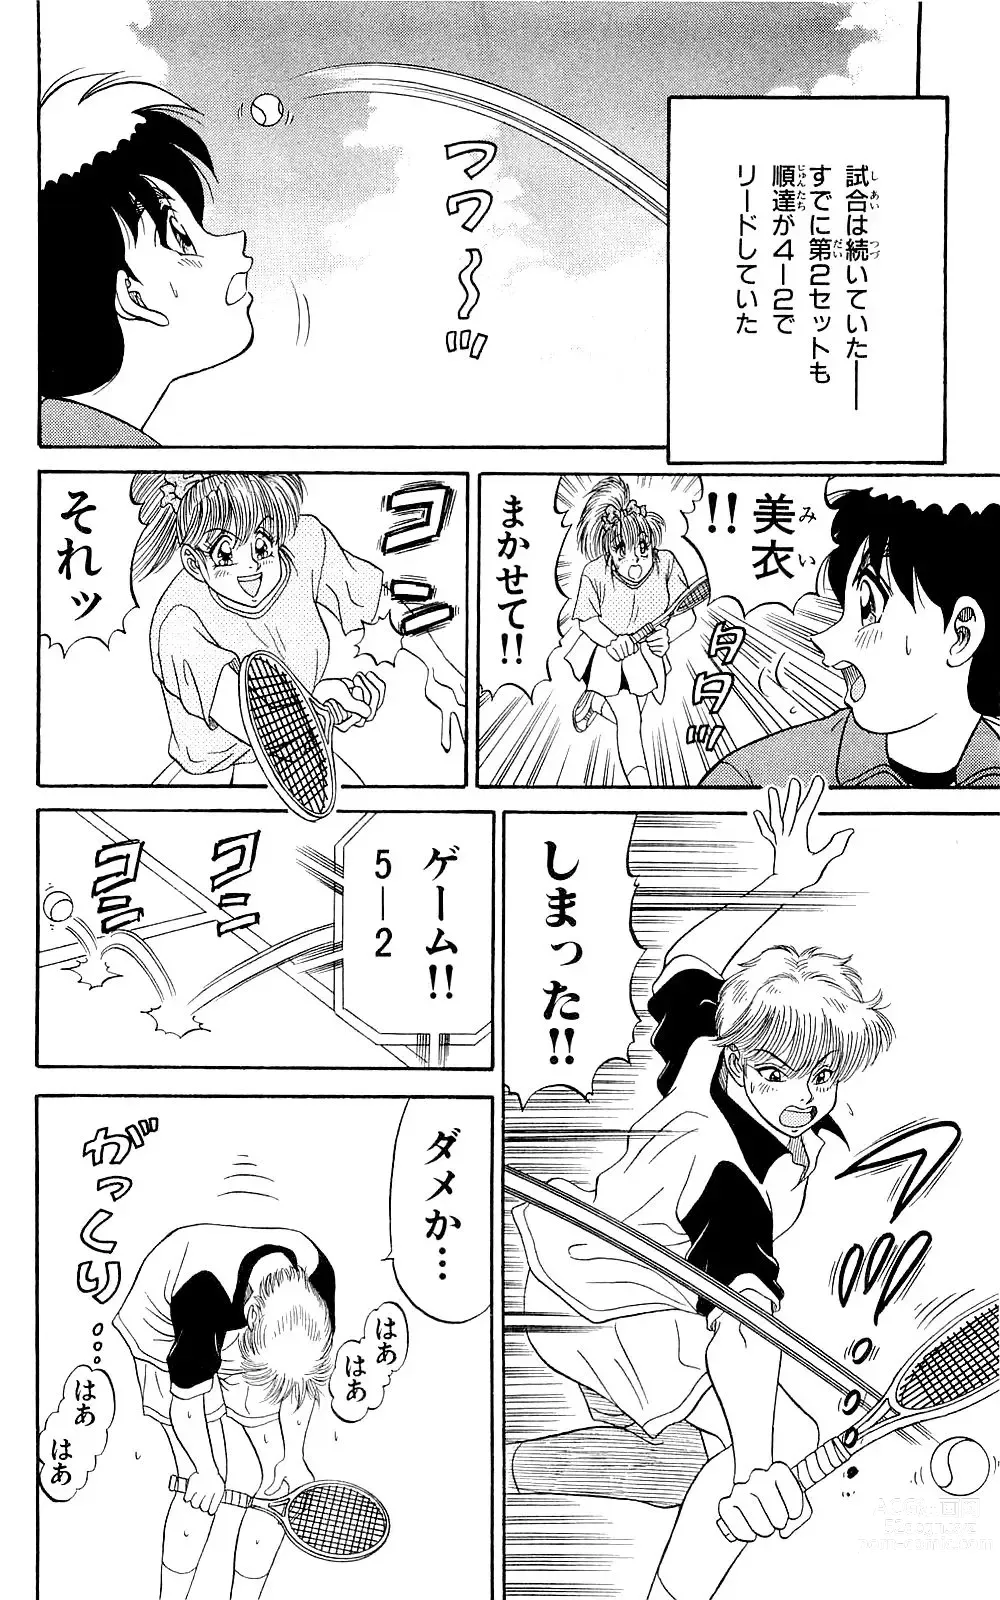 Page 178 of manga Orette Piyoritan 07